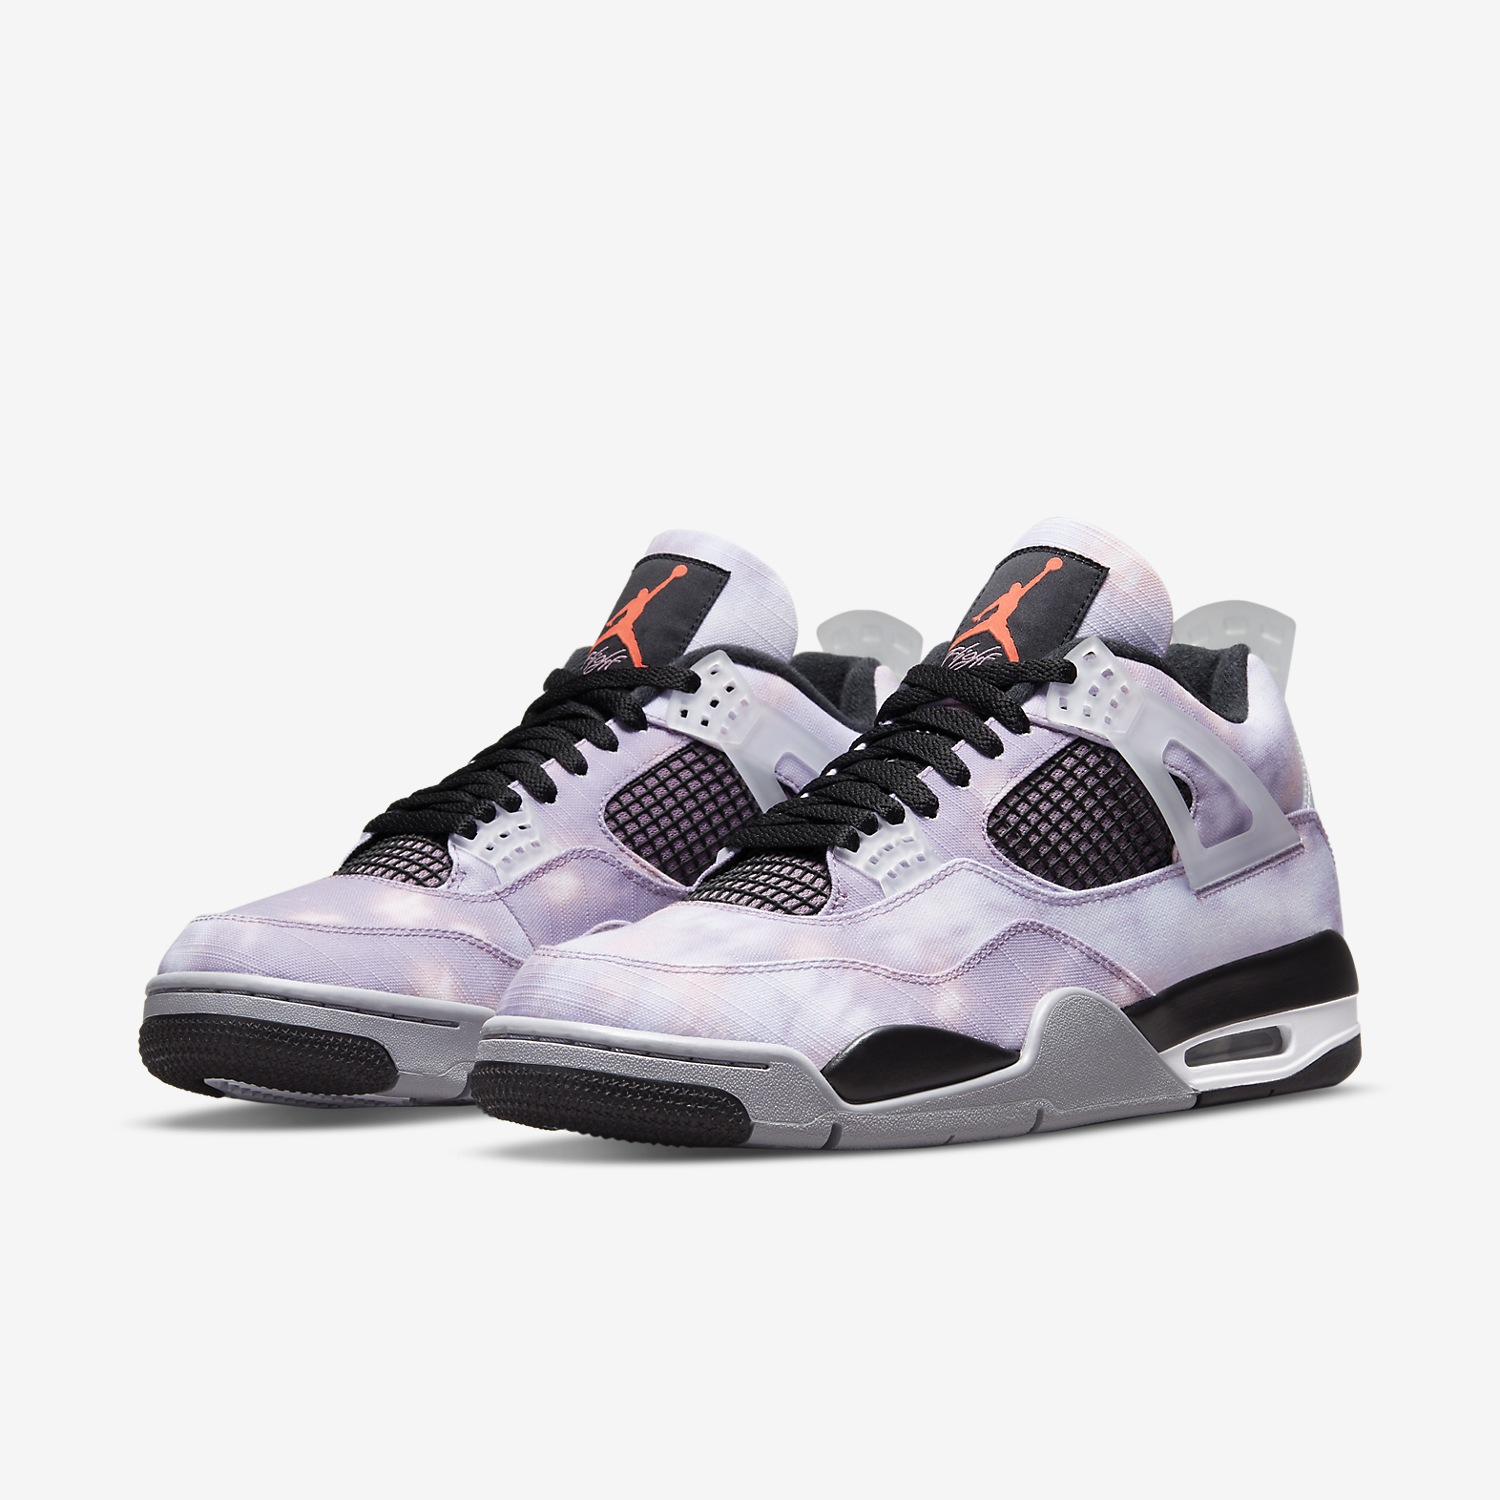 Sneaker Drop — Air Jordan 4 Retro 'Amethyst Wave'